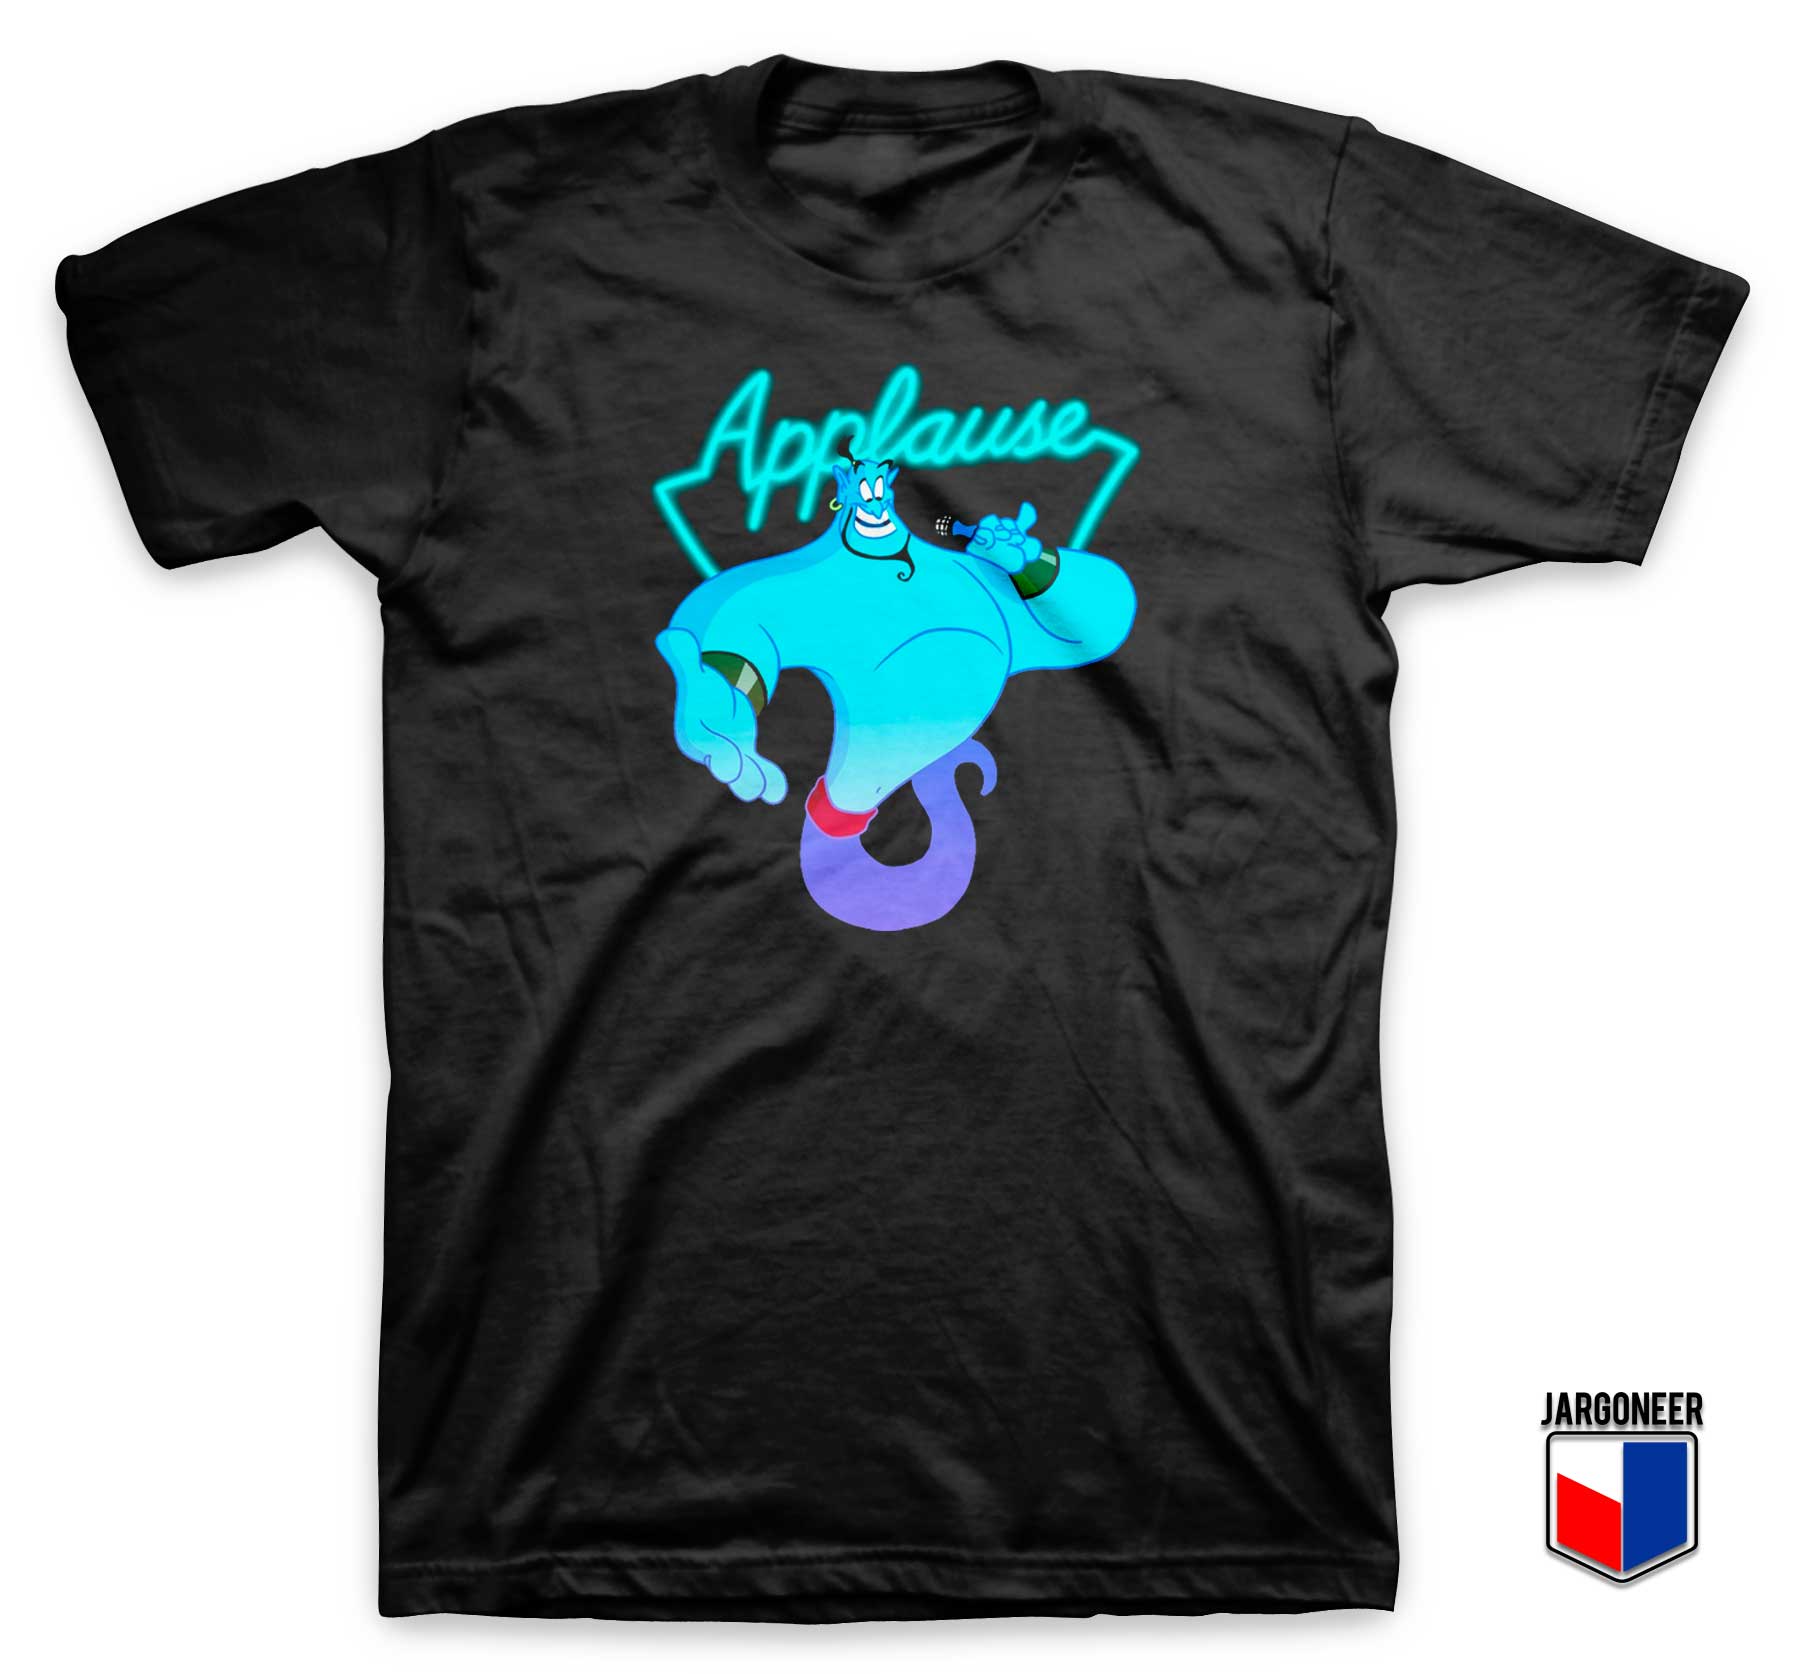 Aladdin Genie Applause T shirt - Shop Unique Graphic Cool Shirt Designs